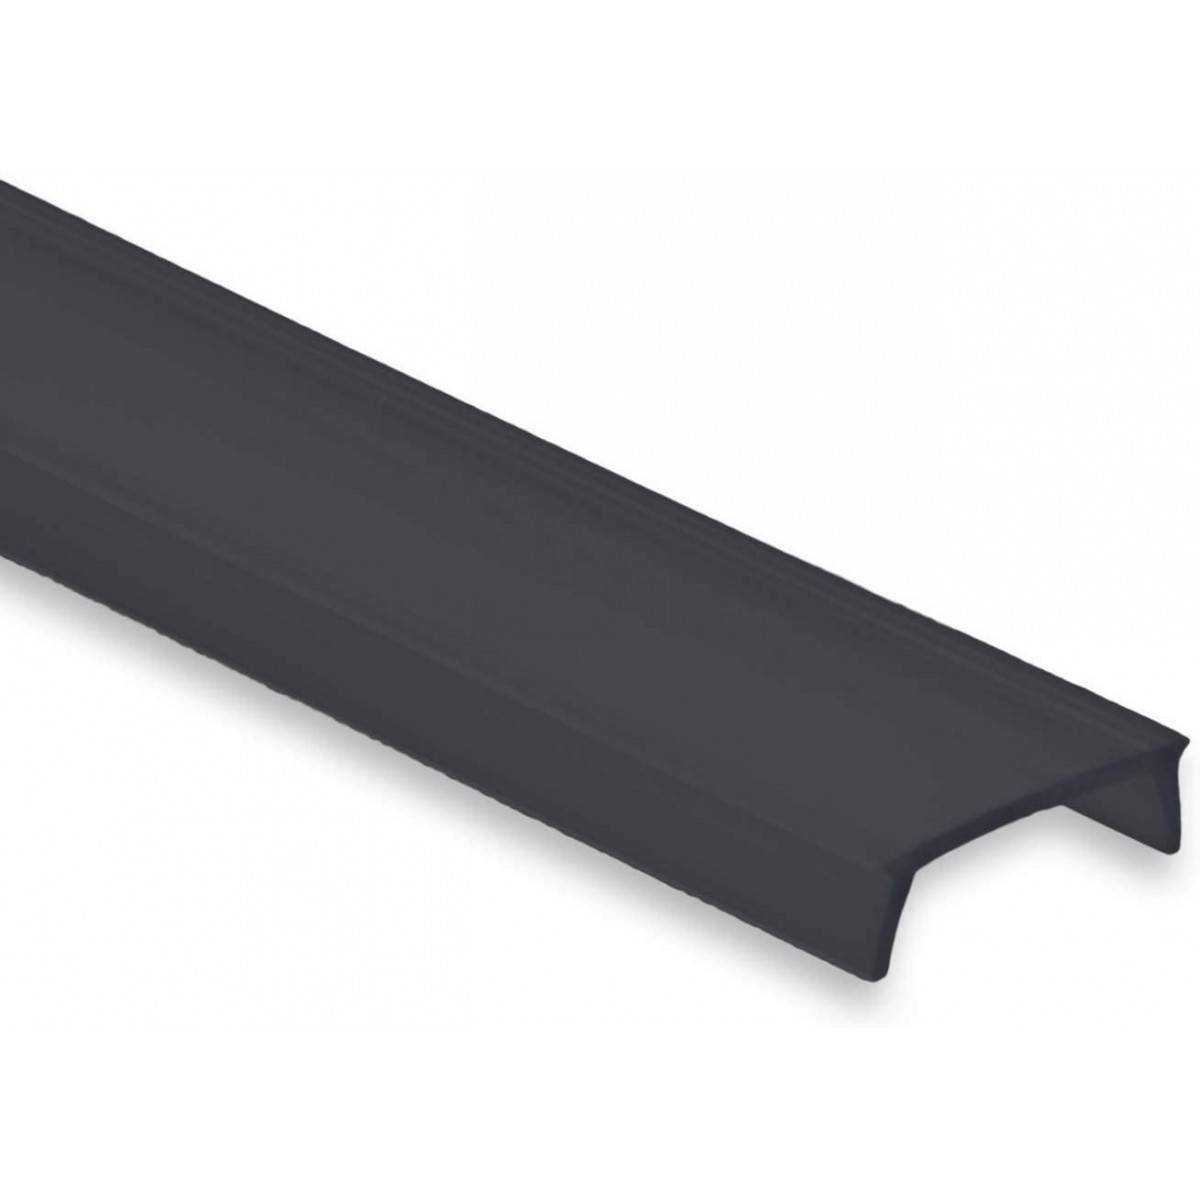 Difusor para perfiles de LED de 17mm (2m) - Perfiles negros